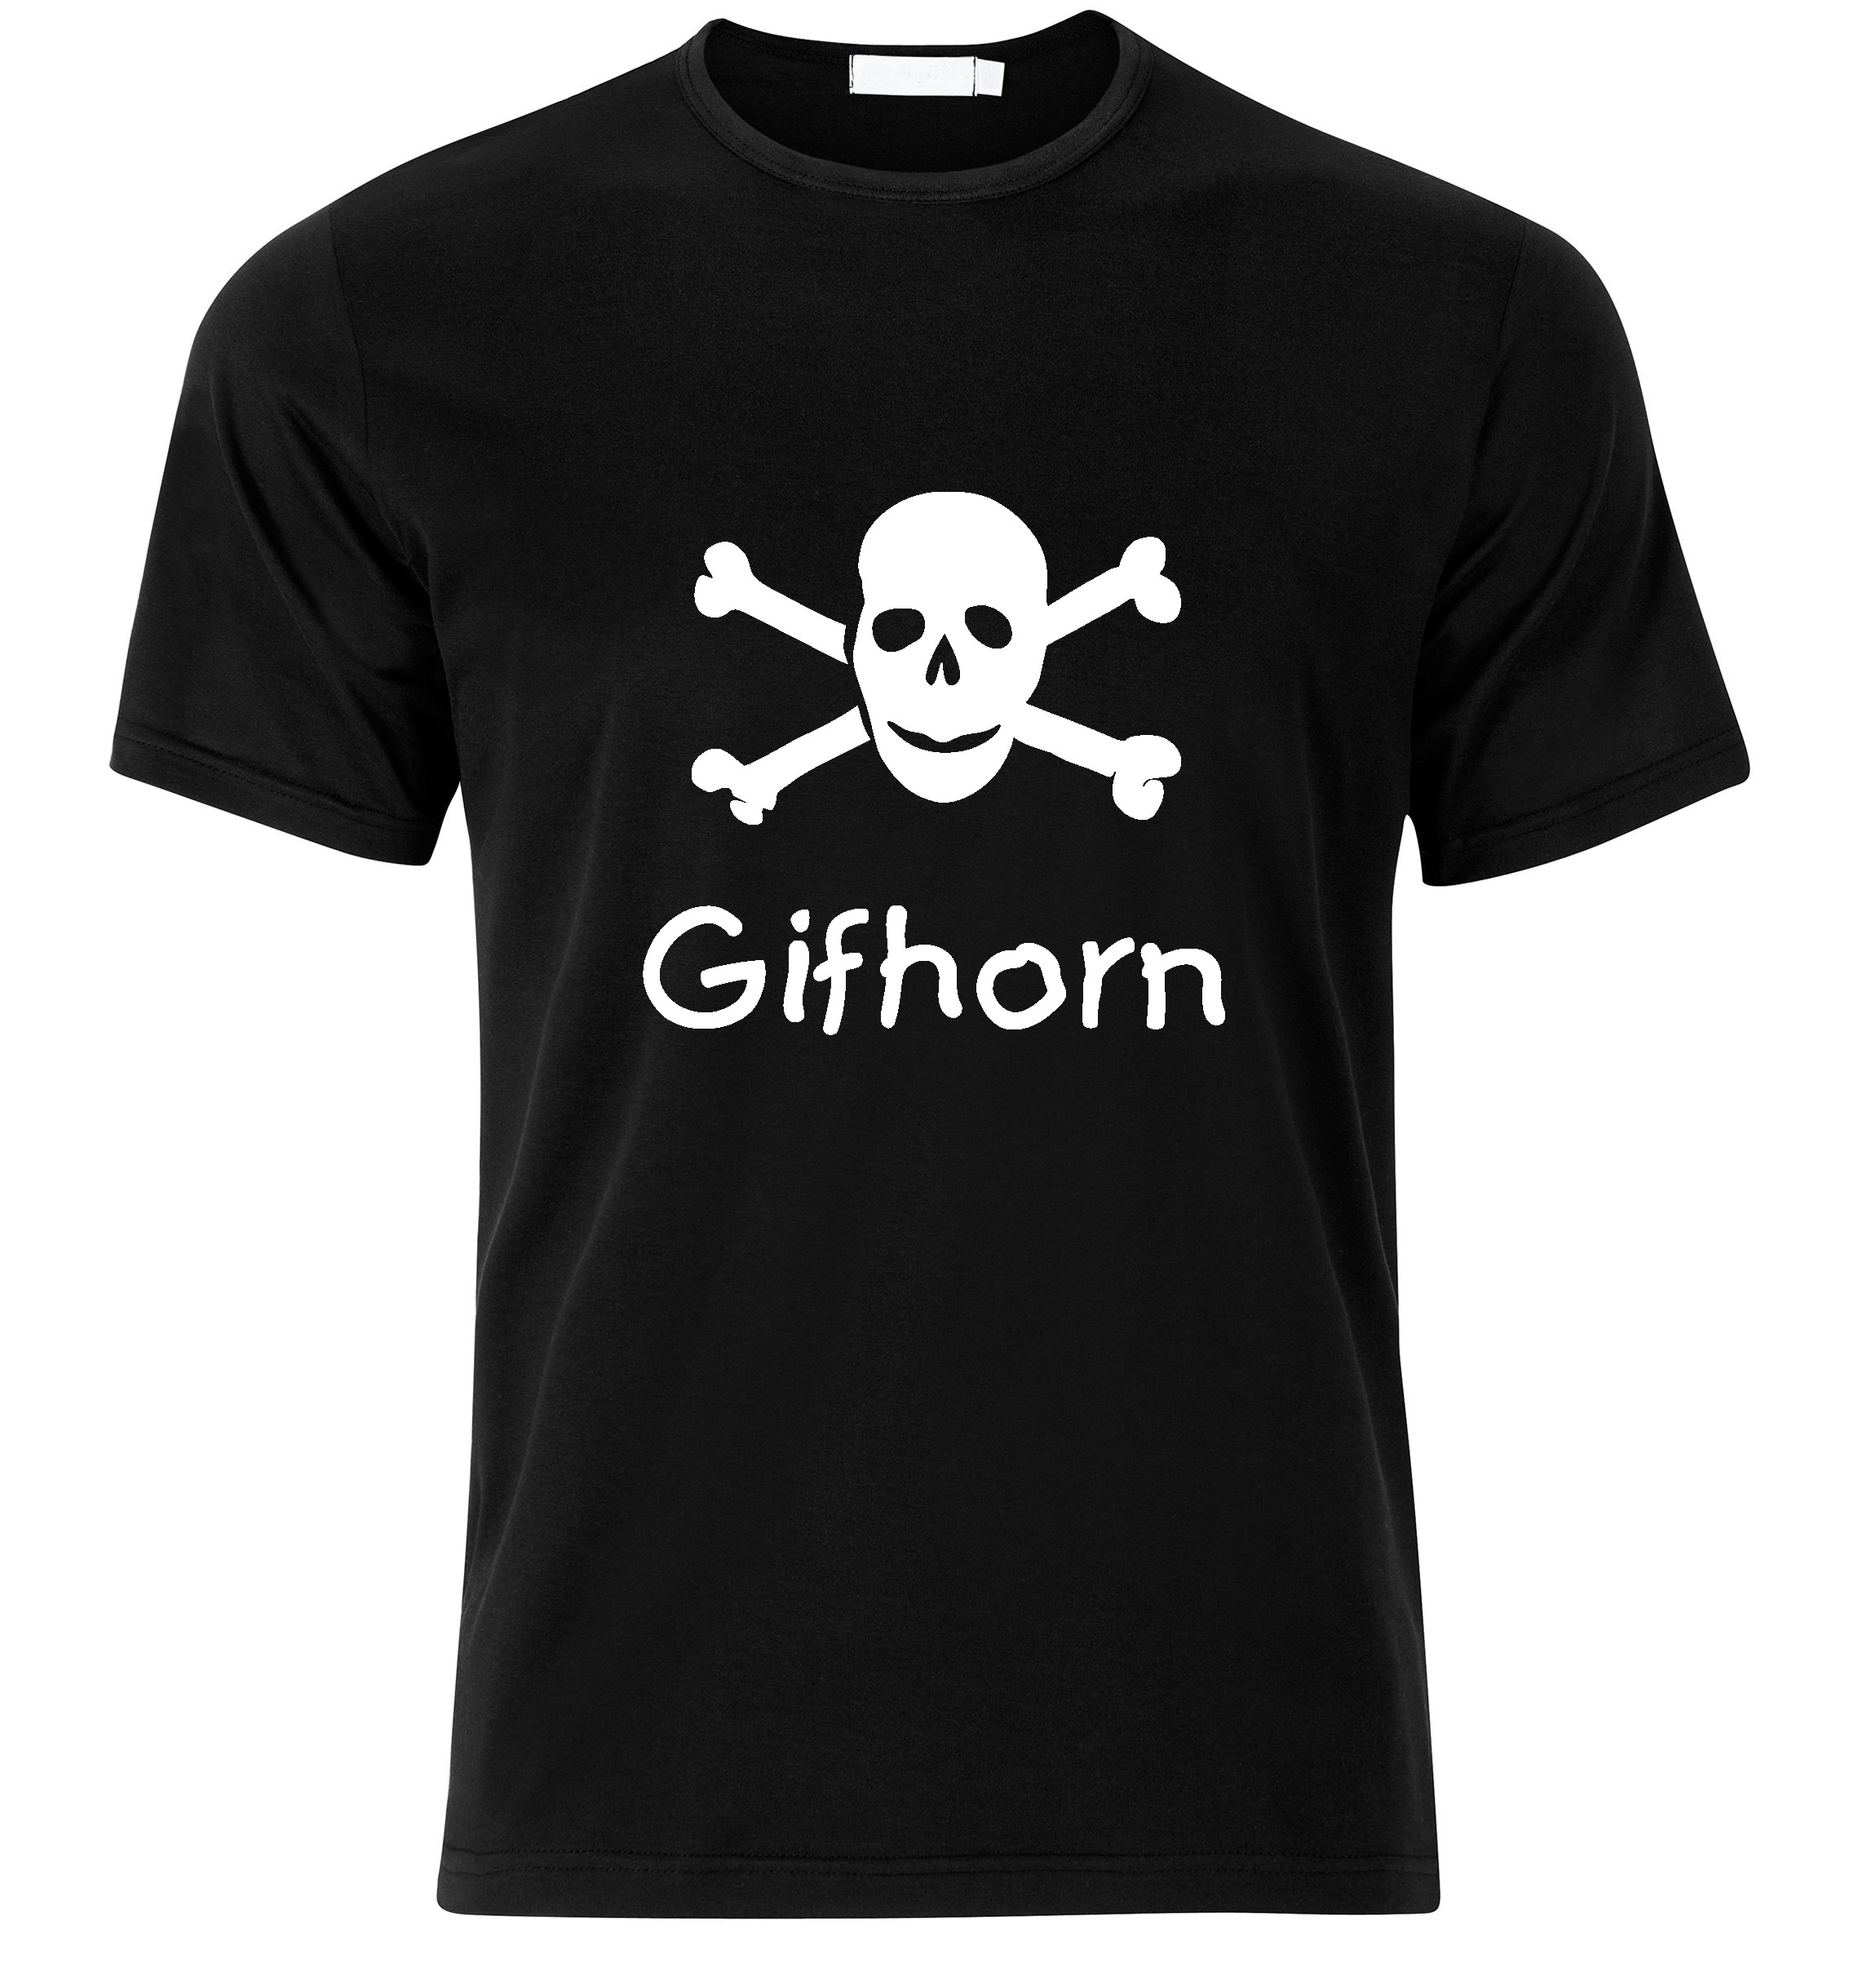 T-Shirt Gifhorn Jolly Roger, Totenkopf